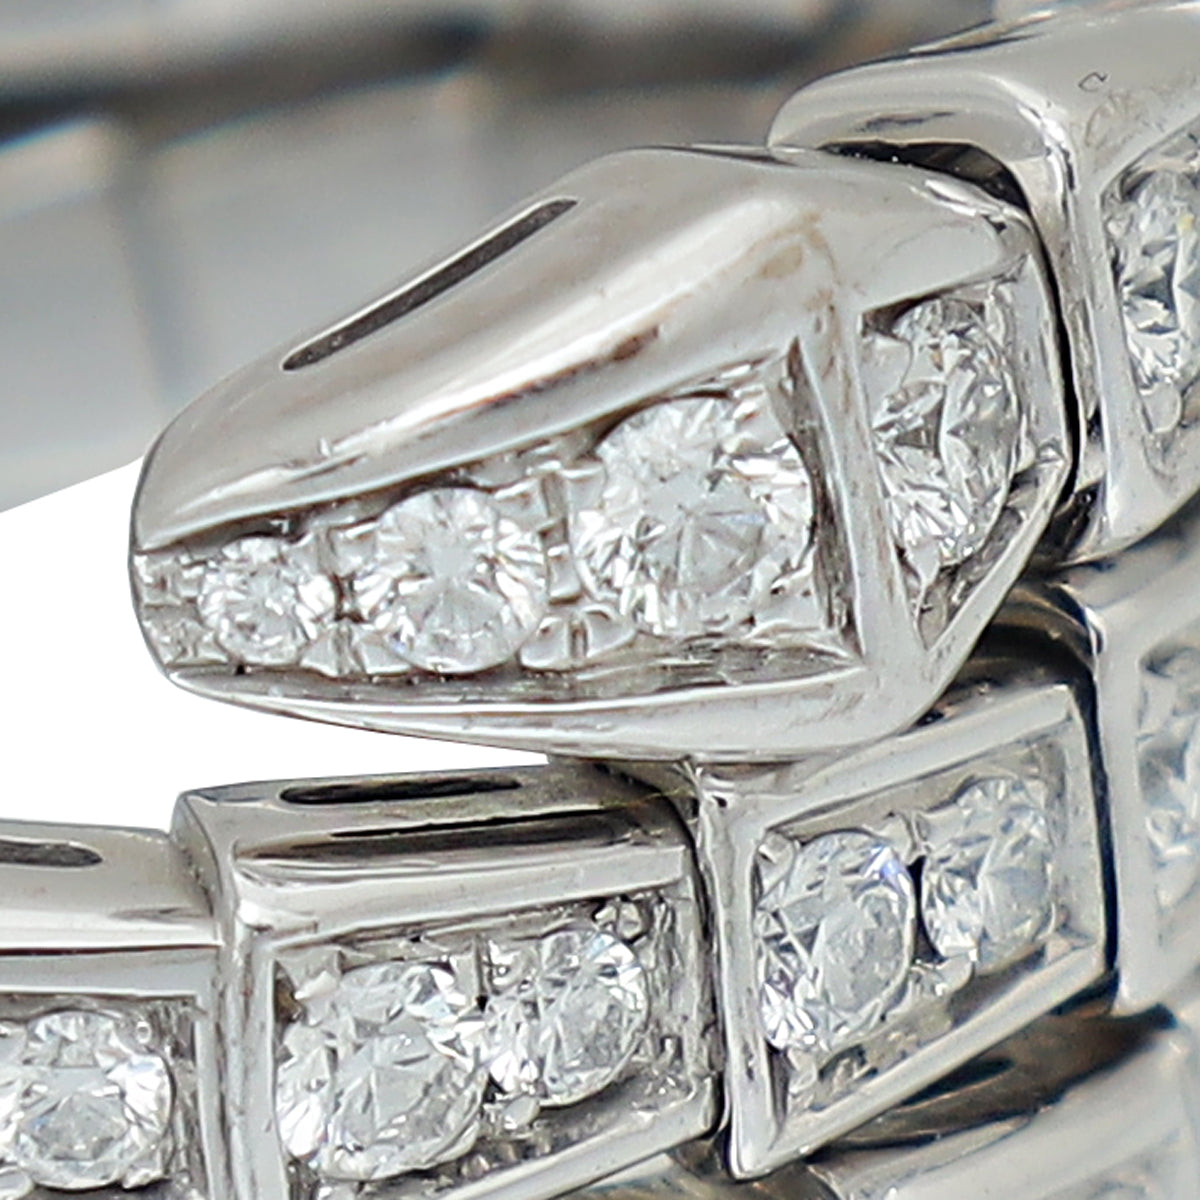 Bvlgari 18K White Gold Diamond Serpenti Viper Two-Coil Medium Ring